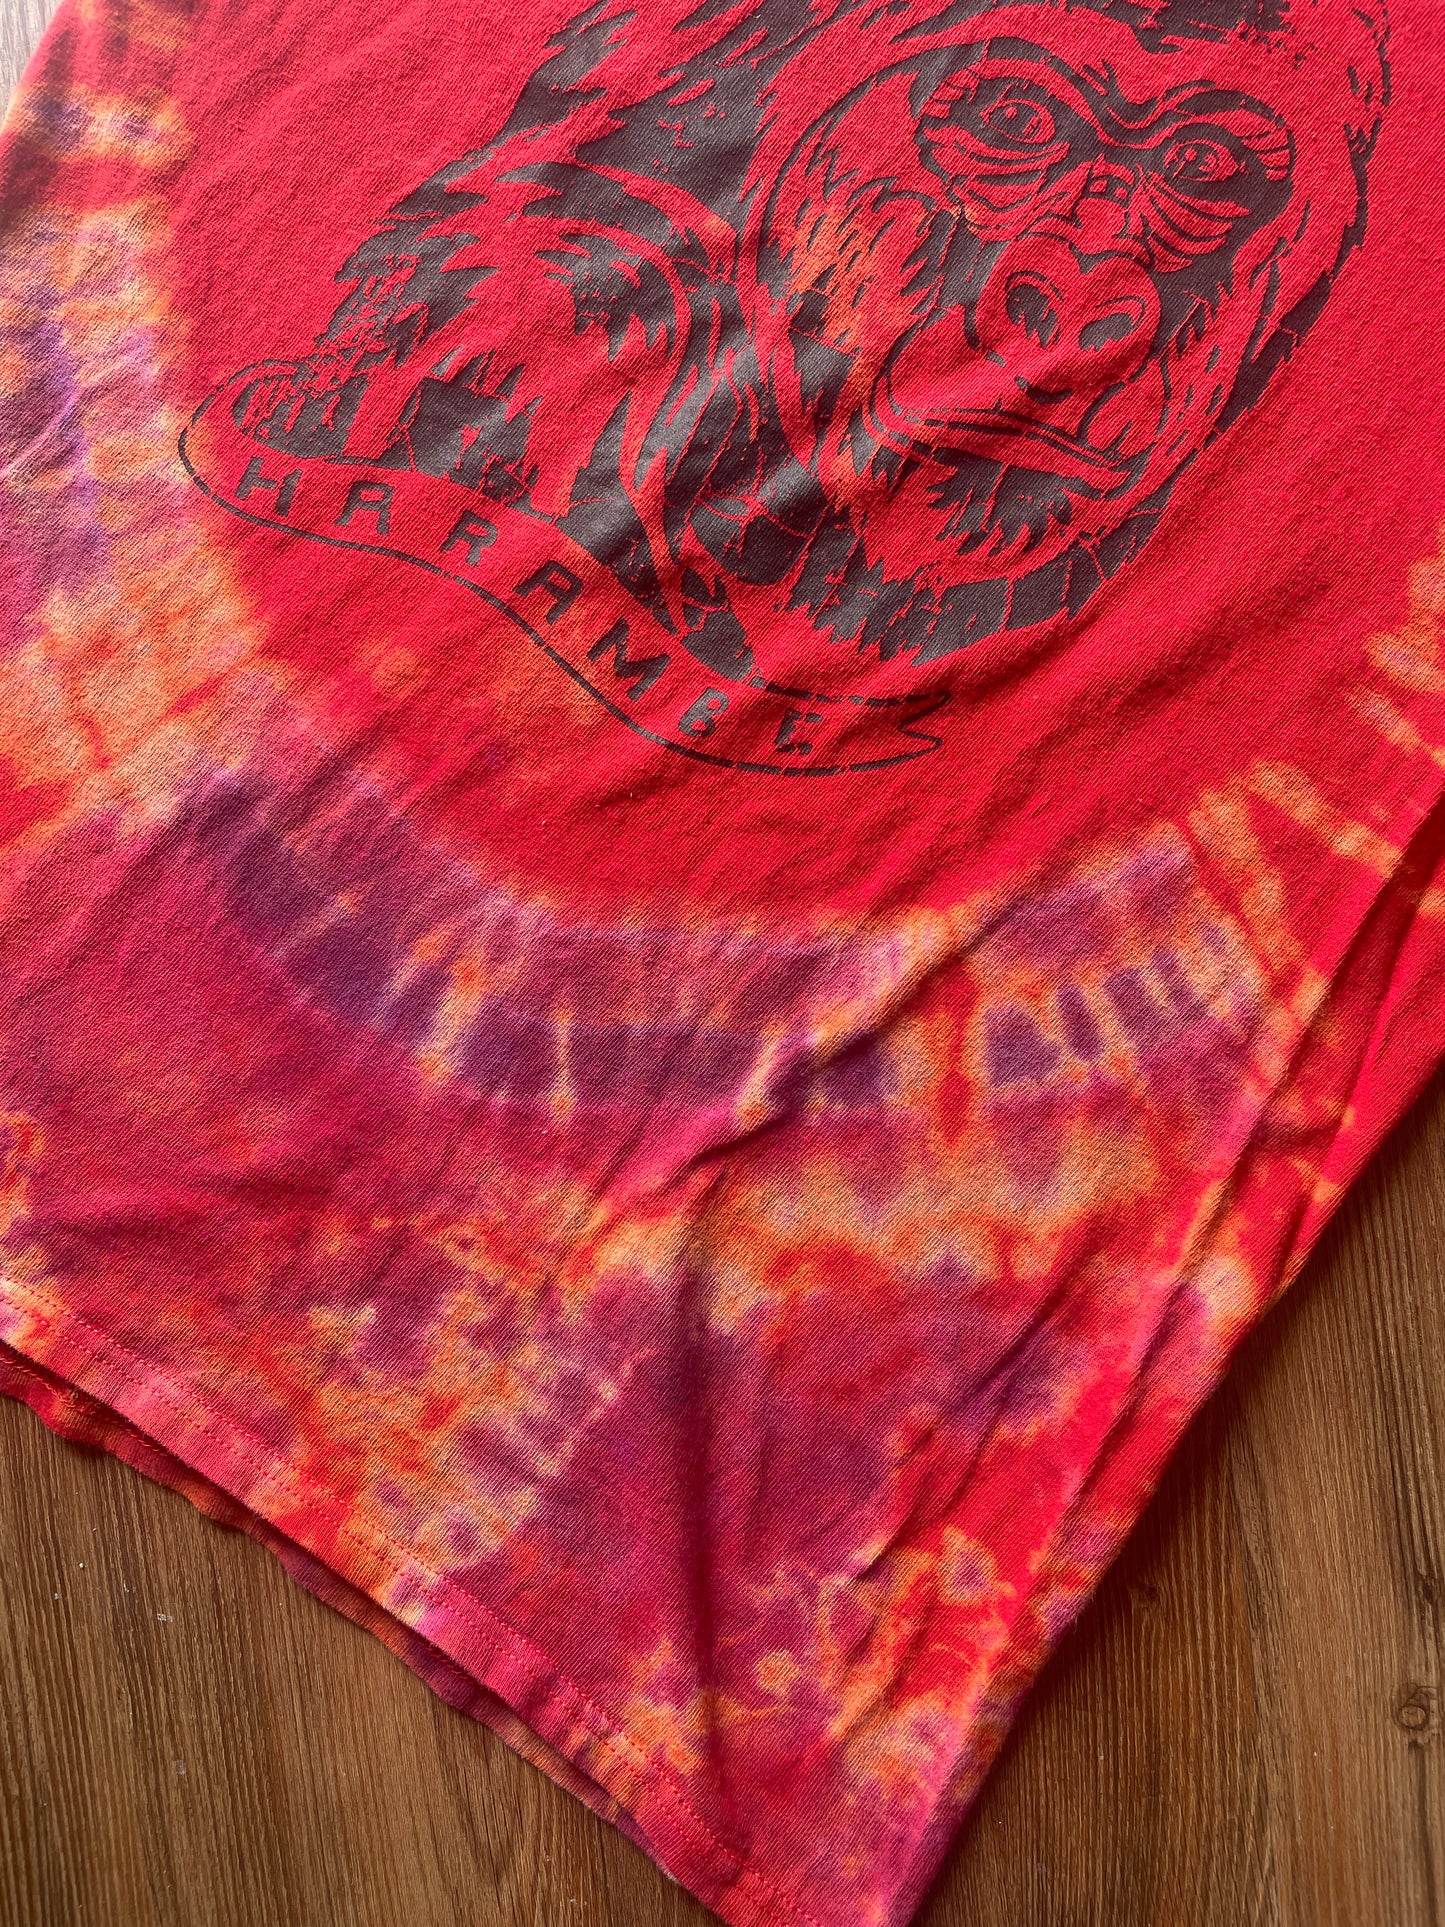 Medium Men’s Harambe Handmade Tie Dye T-Shirt | Red Warm Tones Crumpled Bleach Dye Short Sleeve